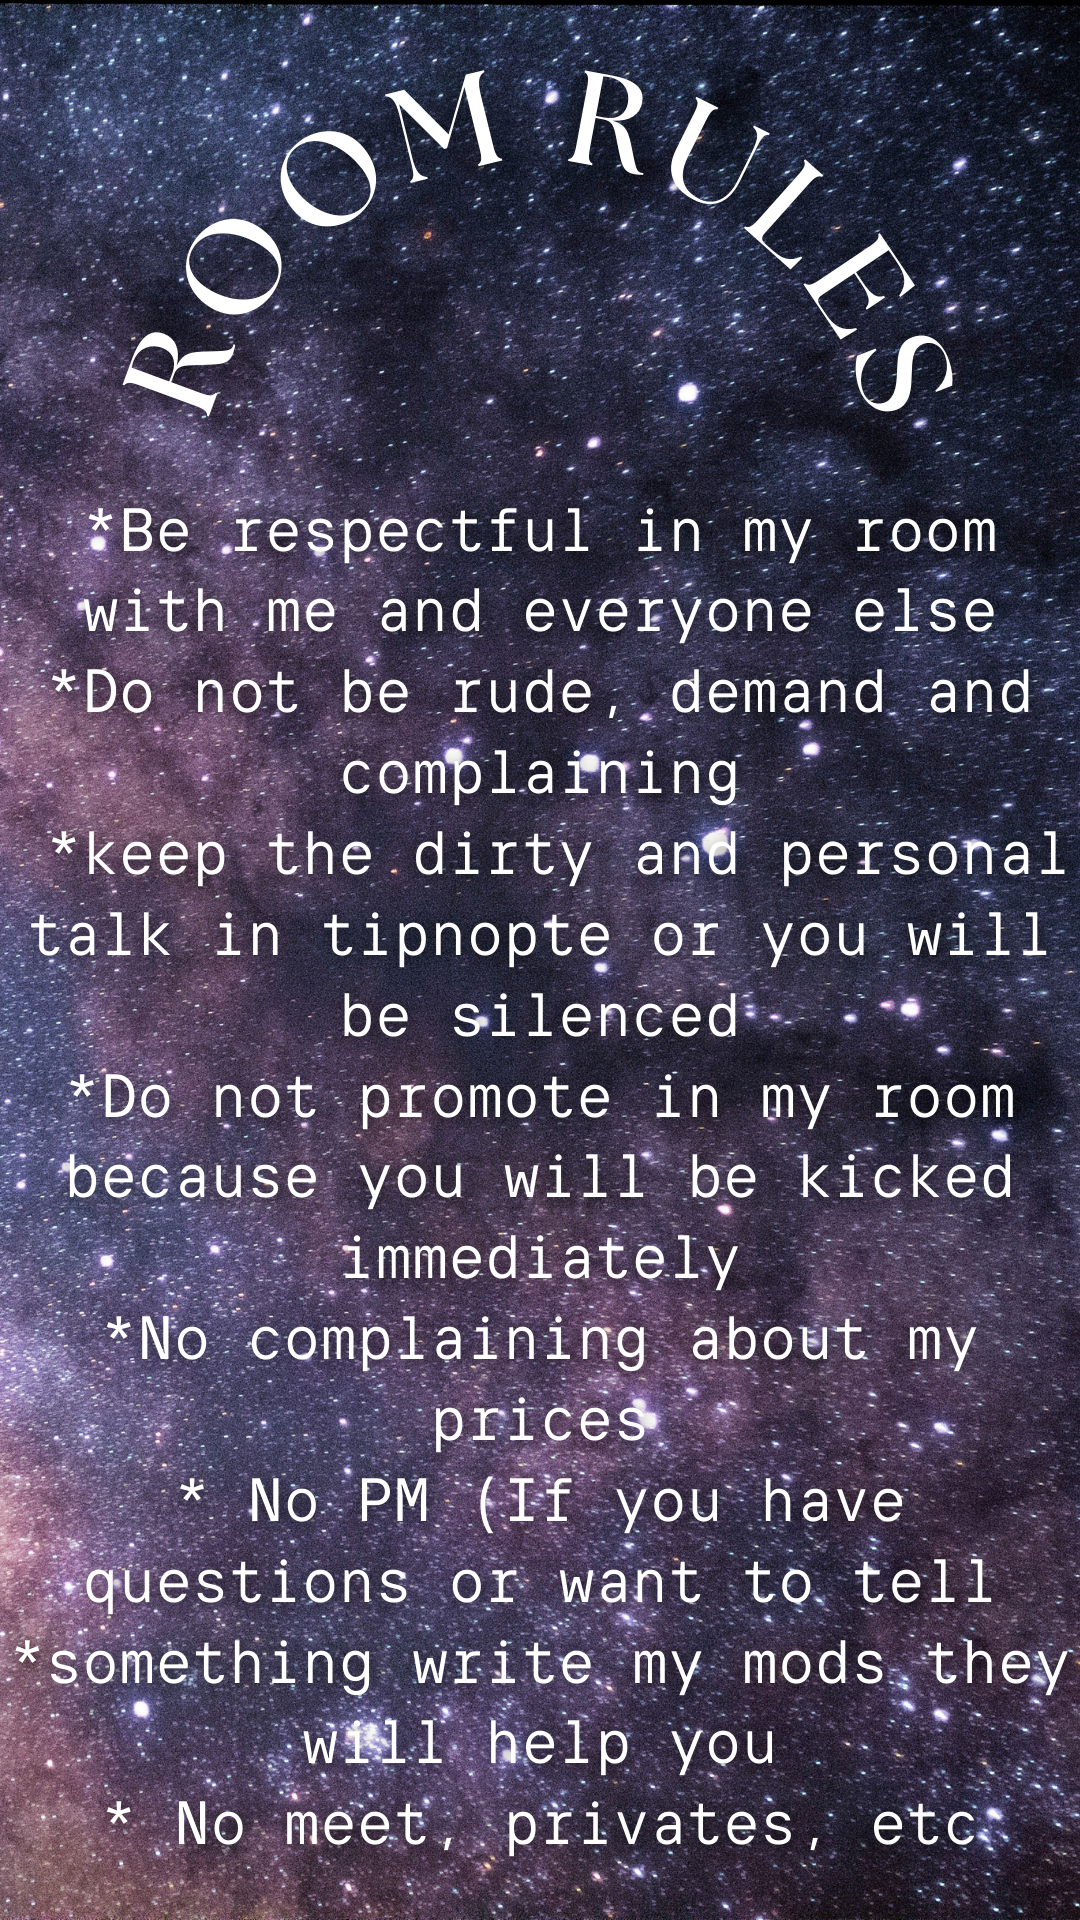 LitleCandy Room Rules image: 1